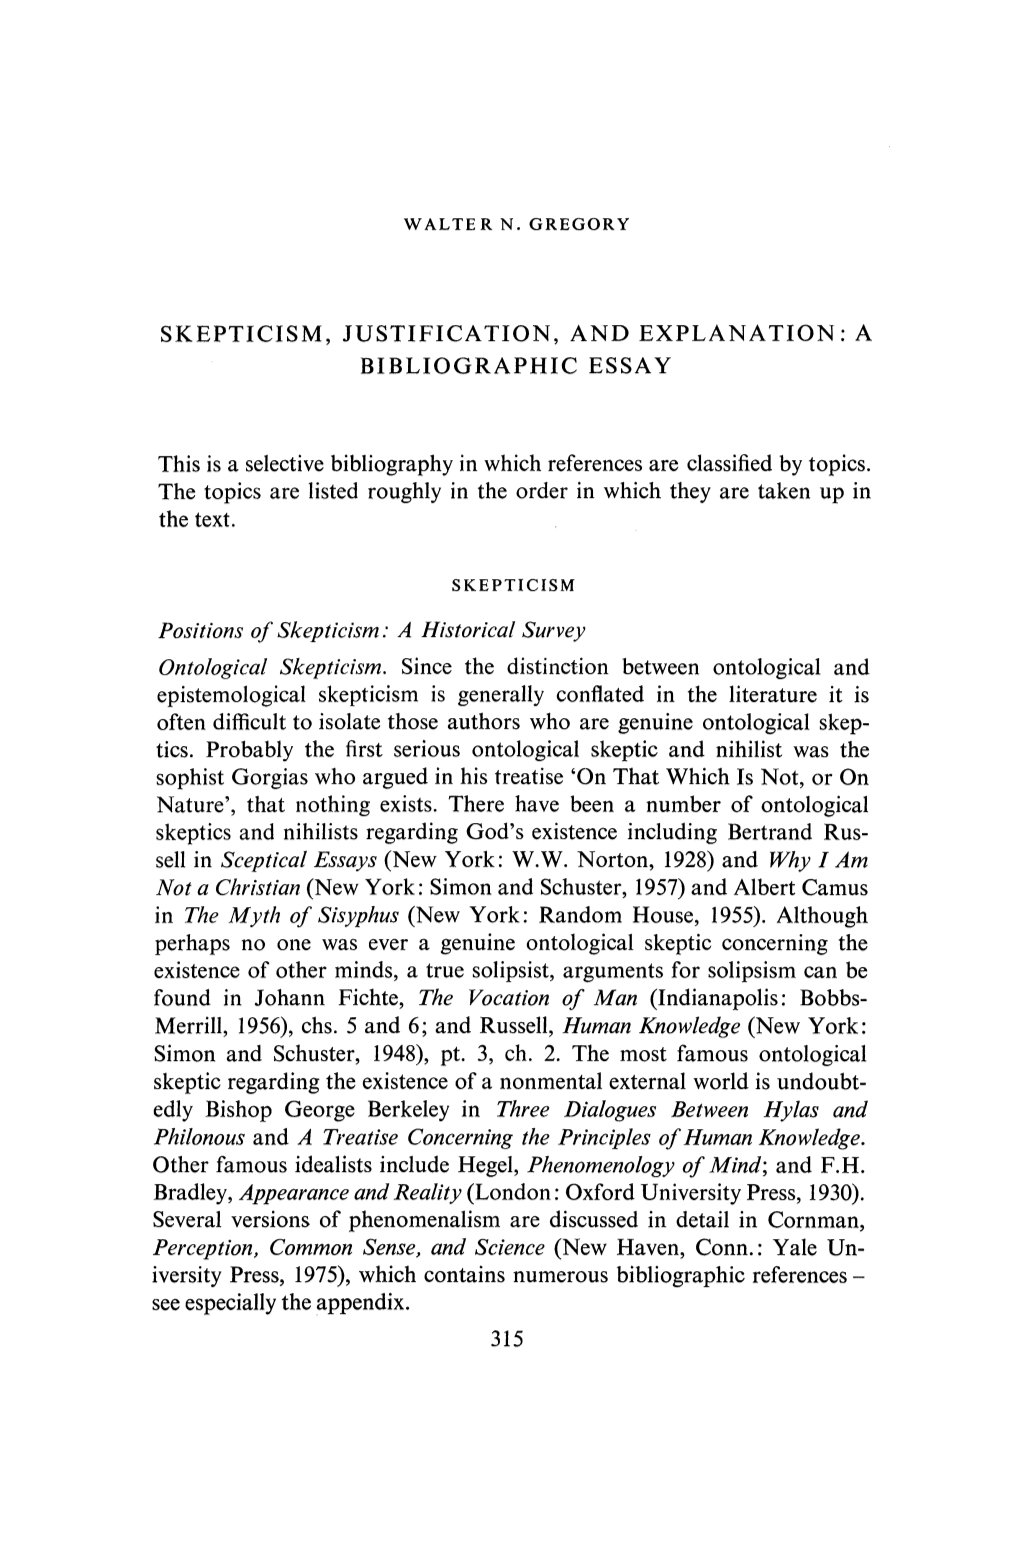 Skepticism, Justification, and Explanation: a Bibliographic Essay